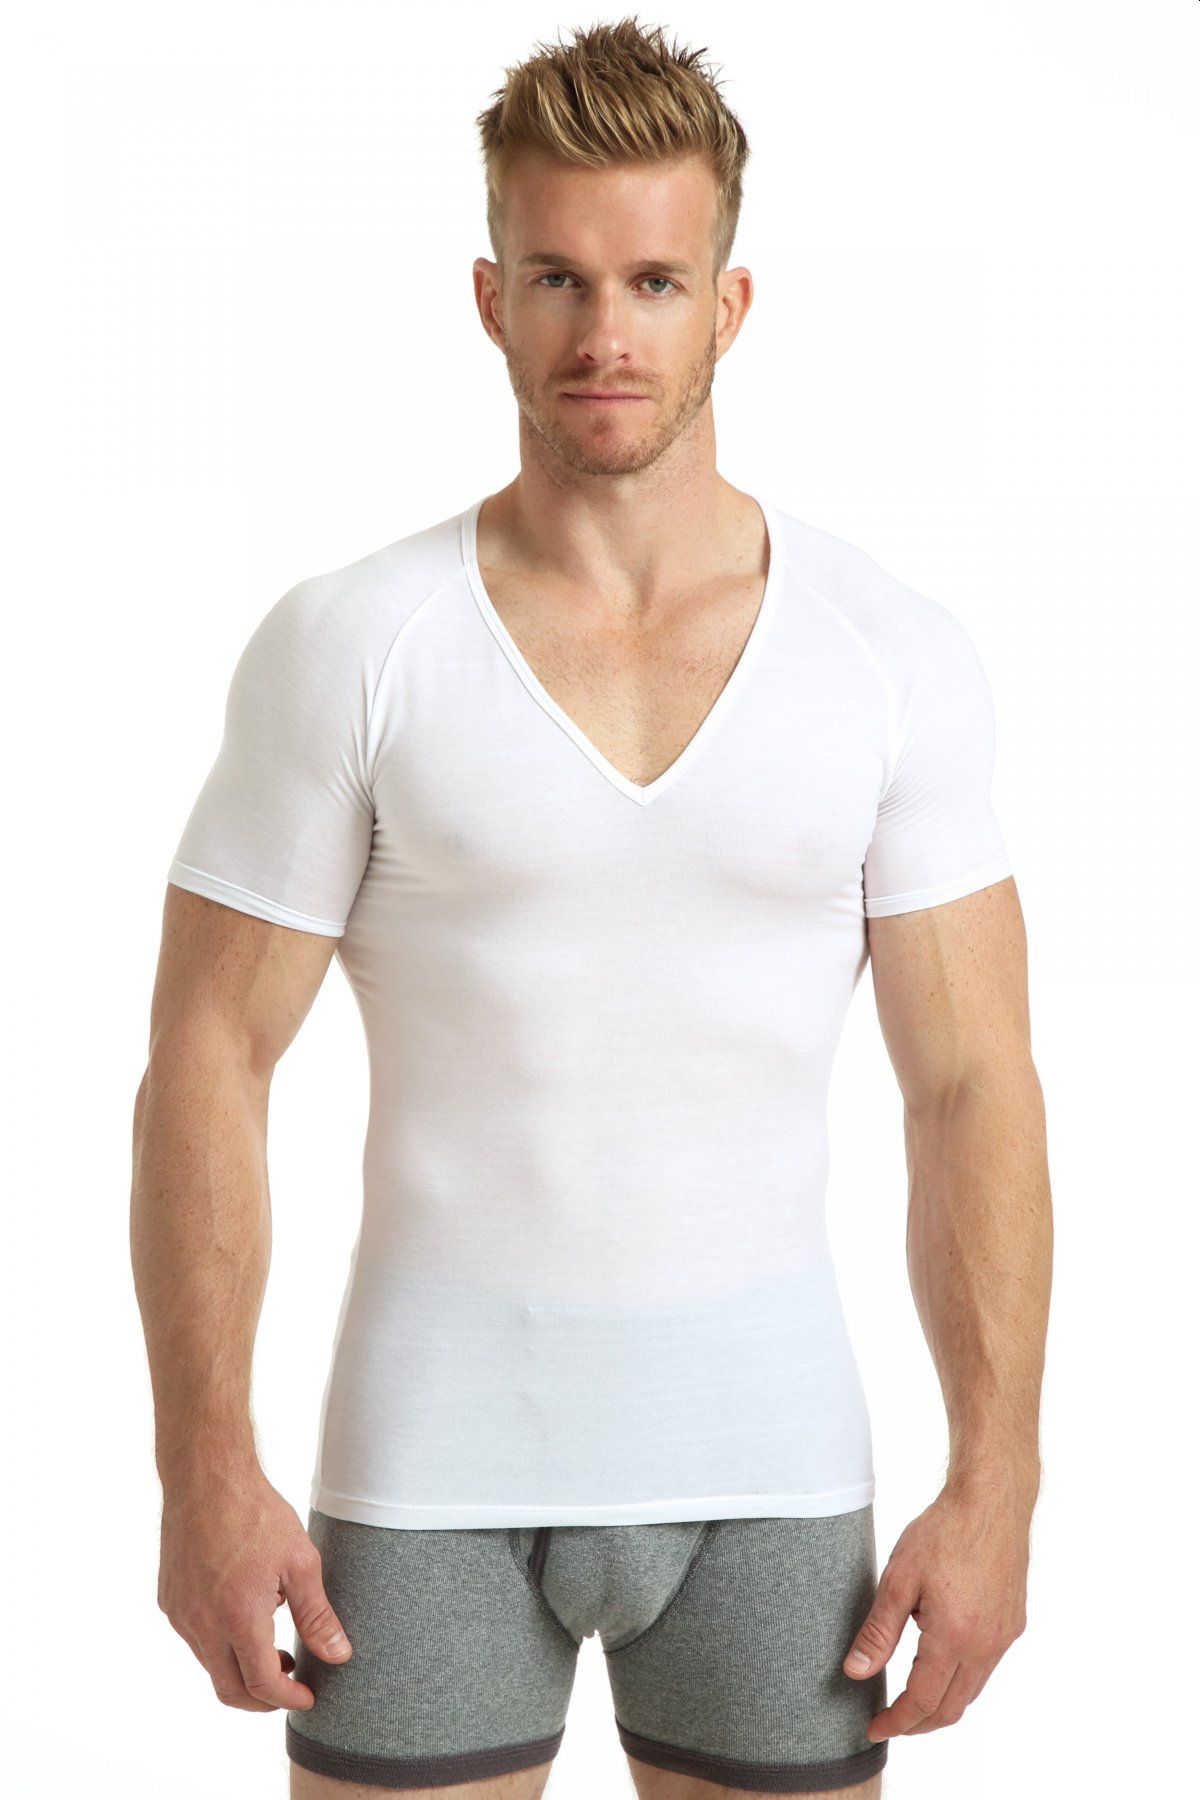 Best Men's Tall Undershirts | Extra Long Undershirts for Men